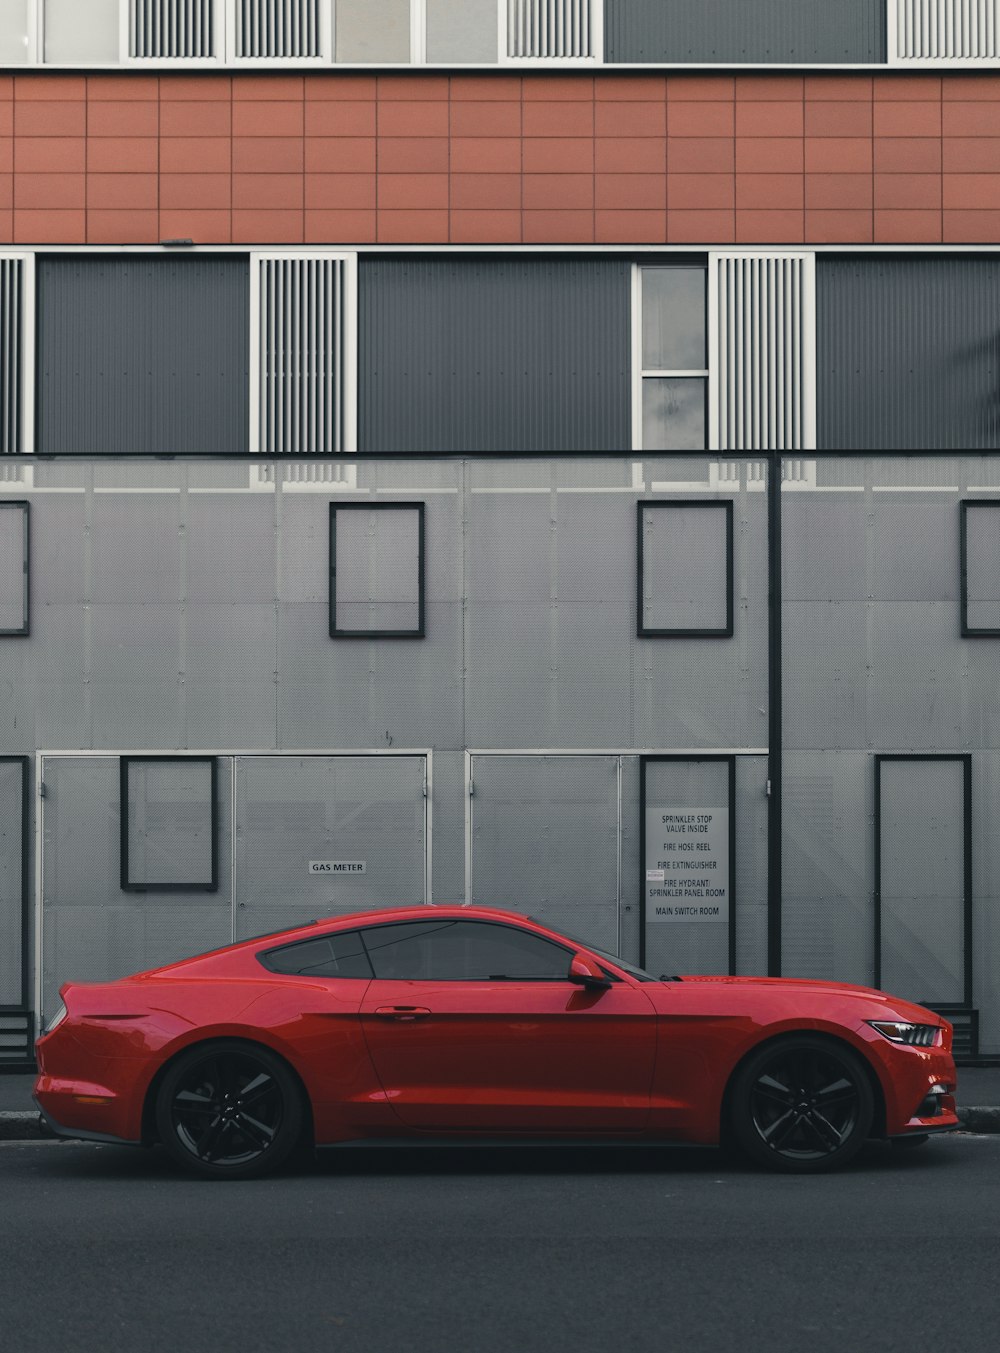 Ford Mustang coupé rossa parcheggiata accanto all'edificio